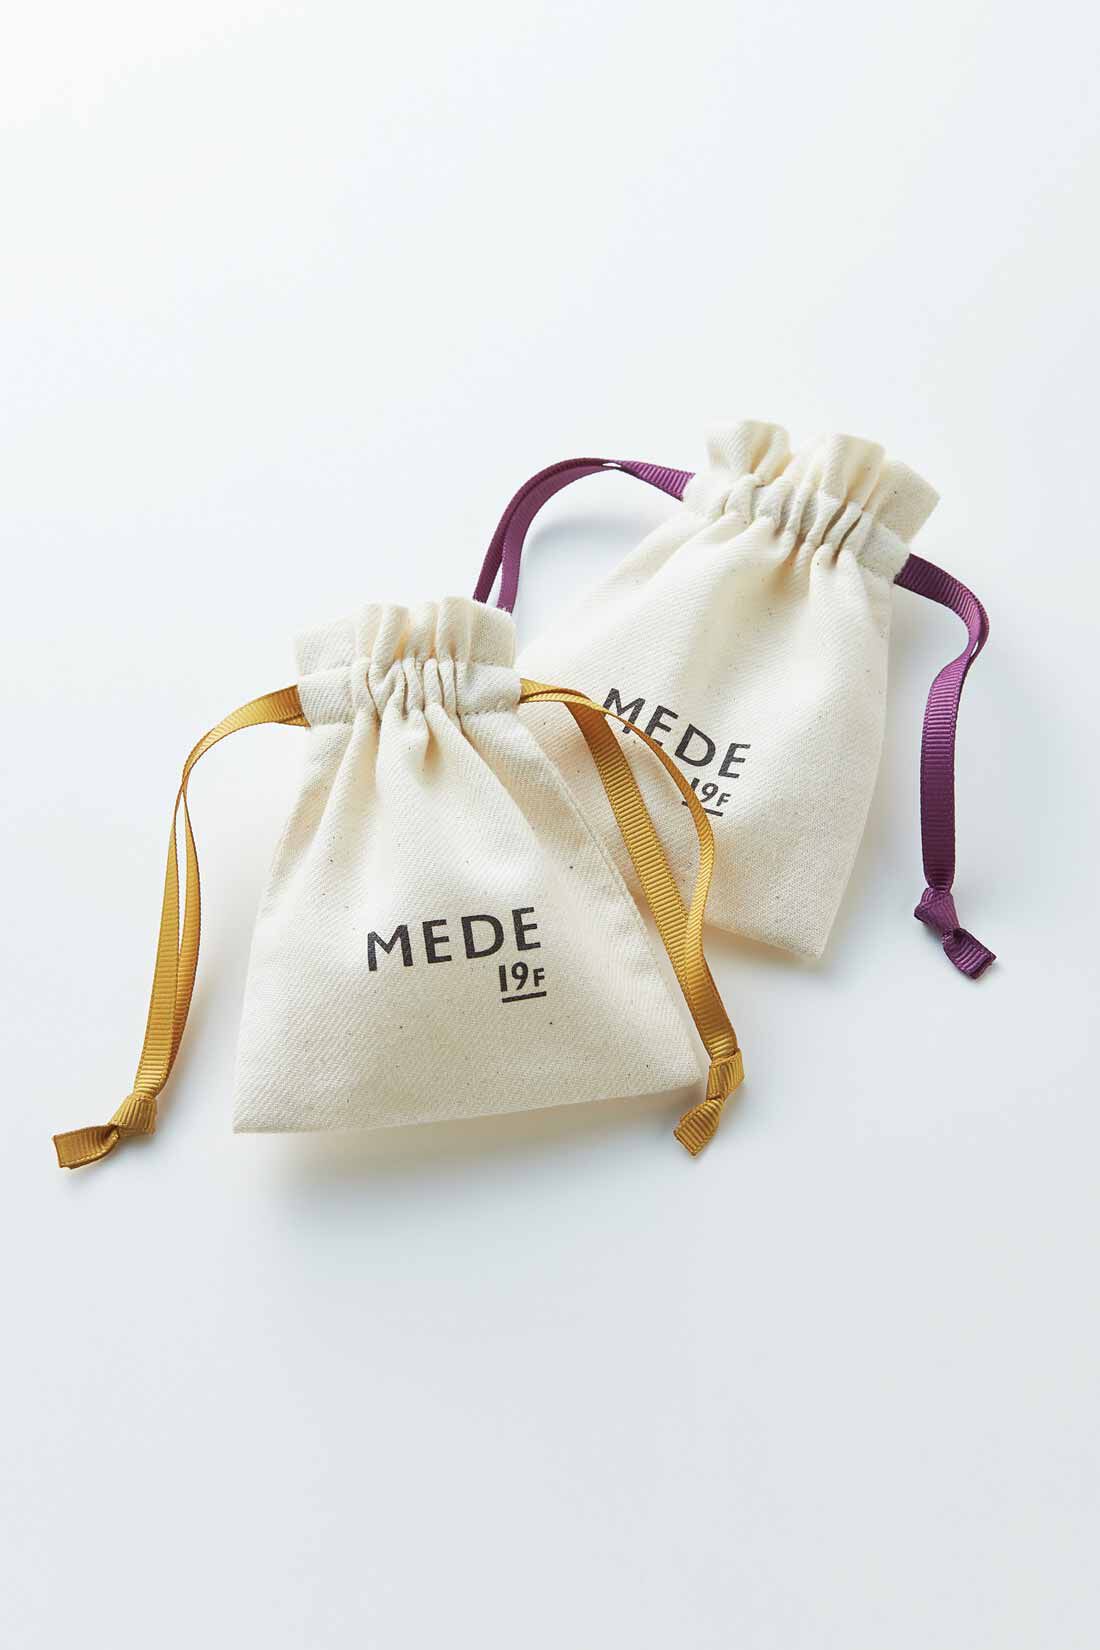 MEDE19F|YPAC for MEDE19F　フランス製陶器ボタンイヤリング type.01|MEDE19Fオリジナルきんちゃくに入れてお届けします。